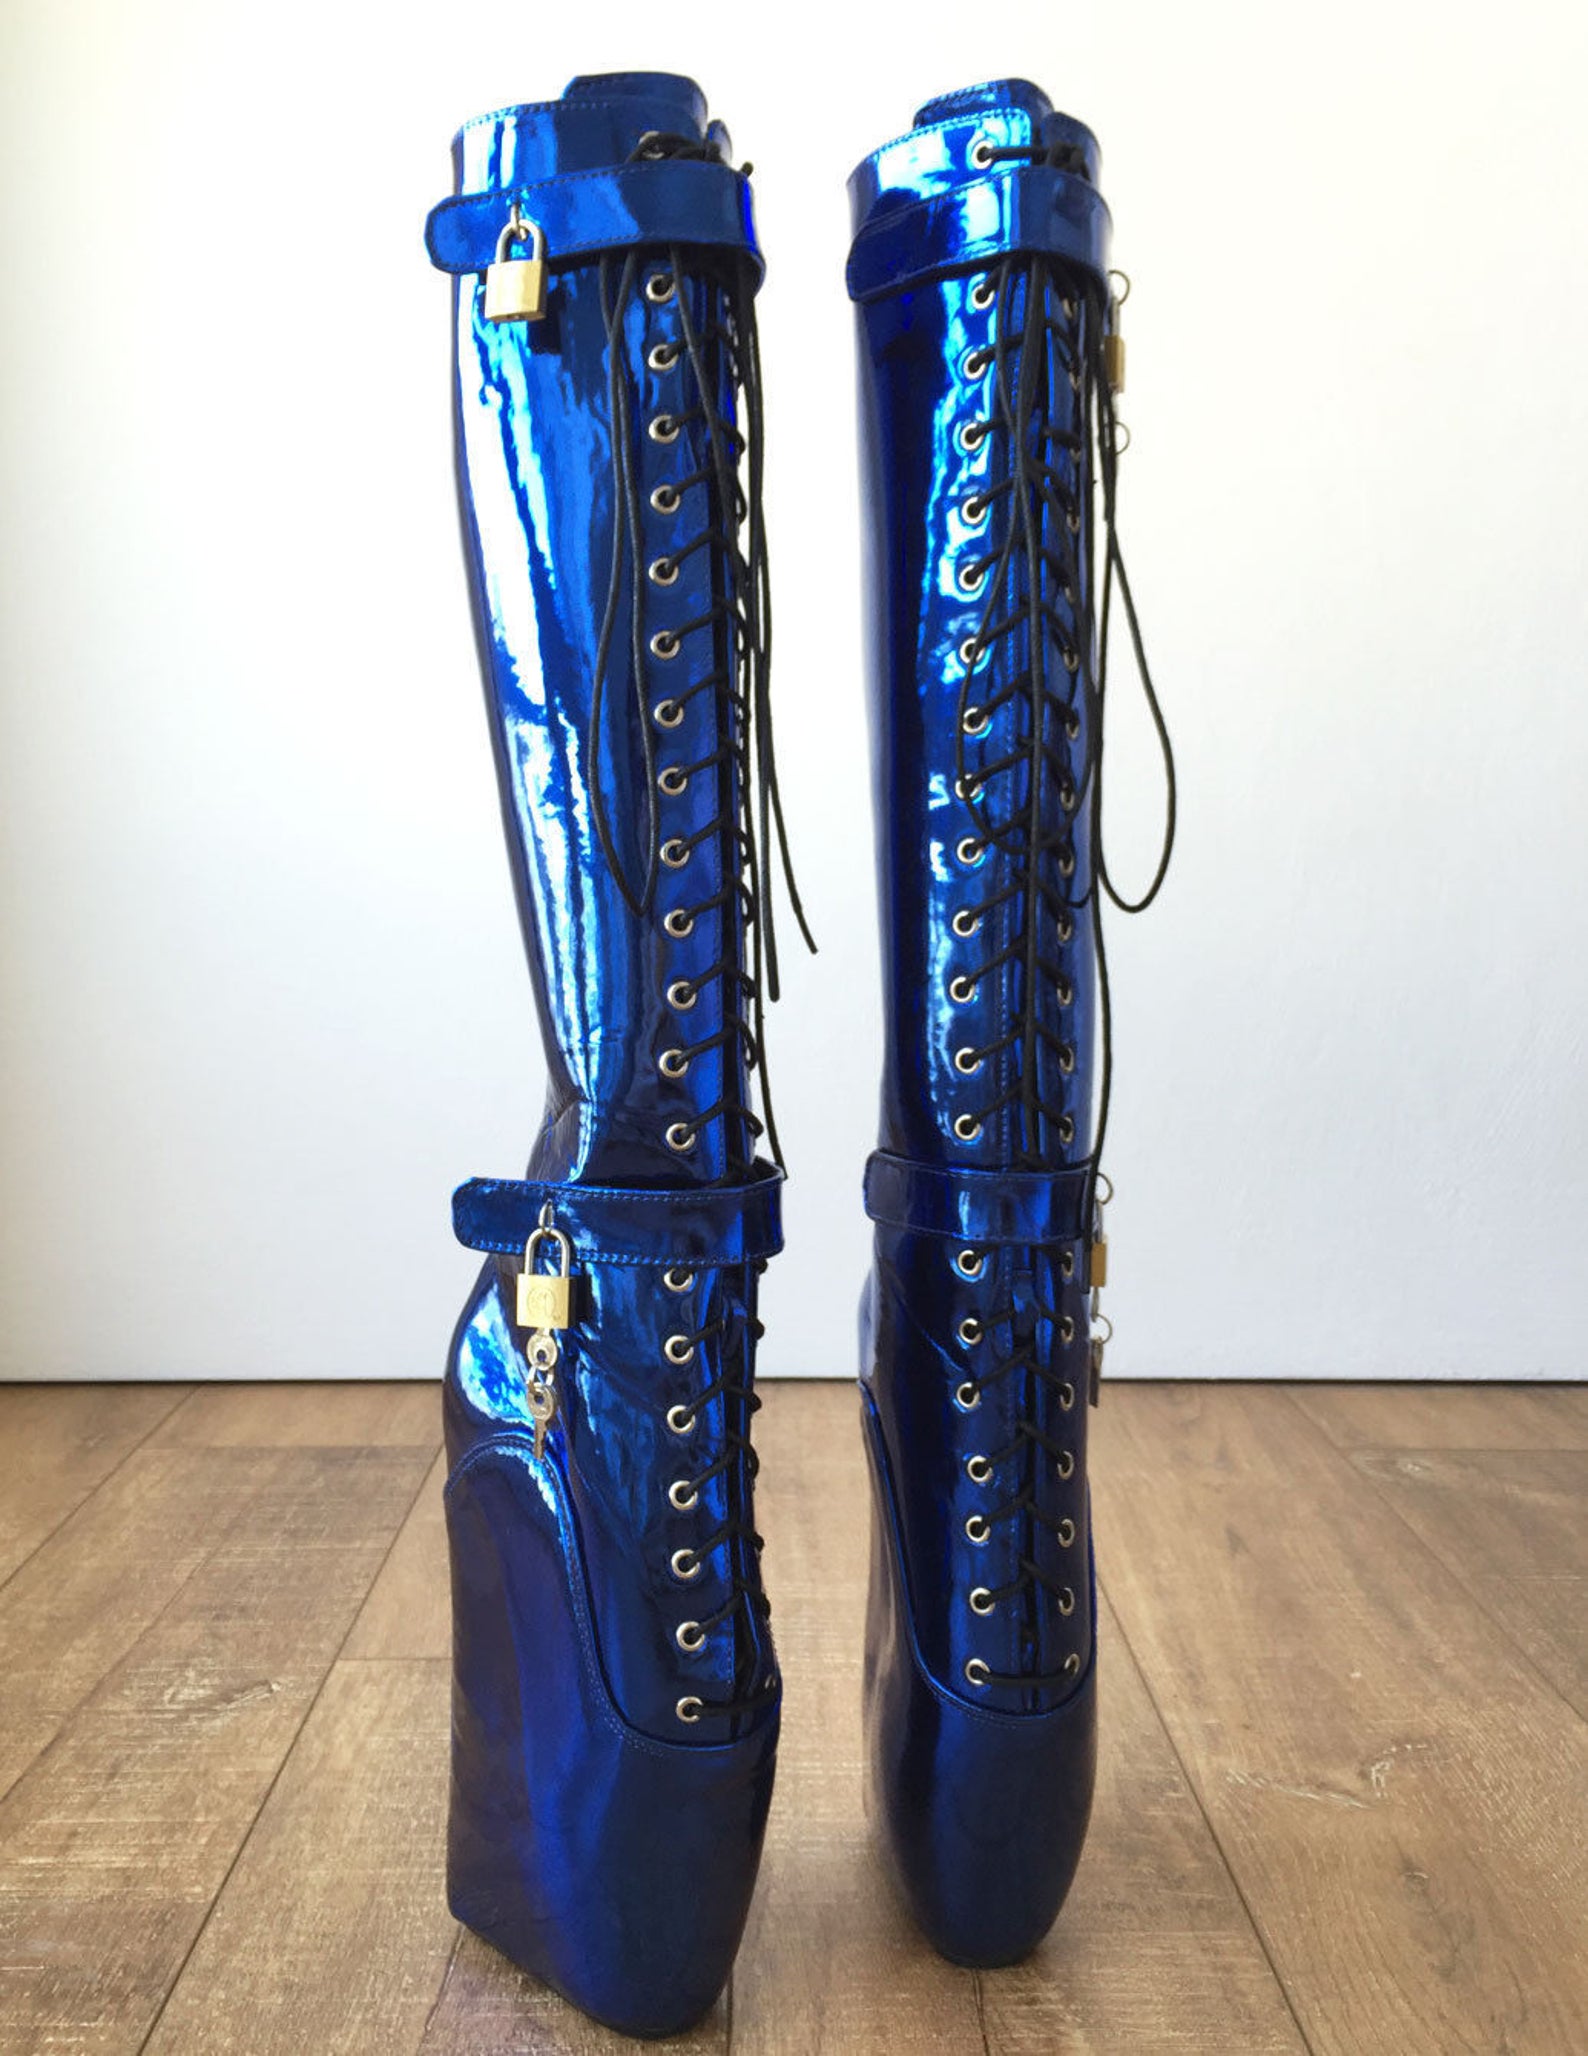 18cm beginner metallic blue heelless fetish punk goth pinup ballet lockable boot